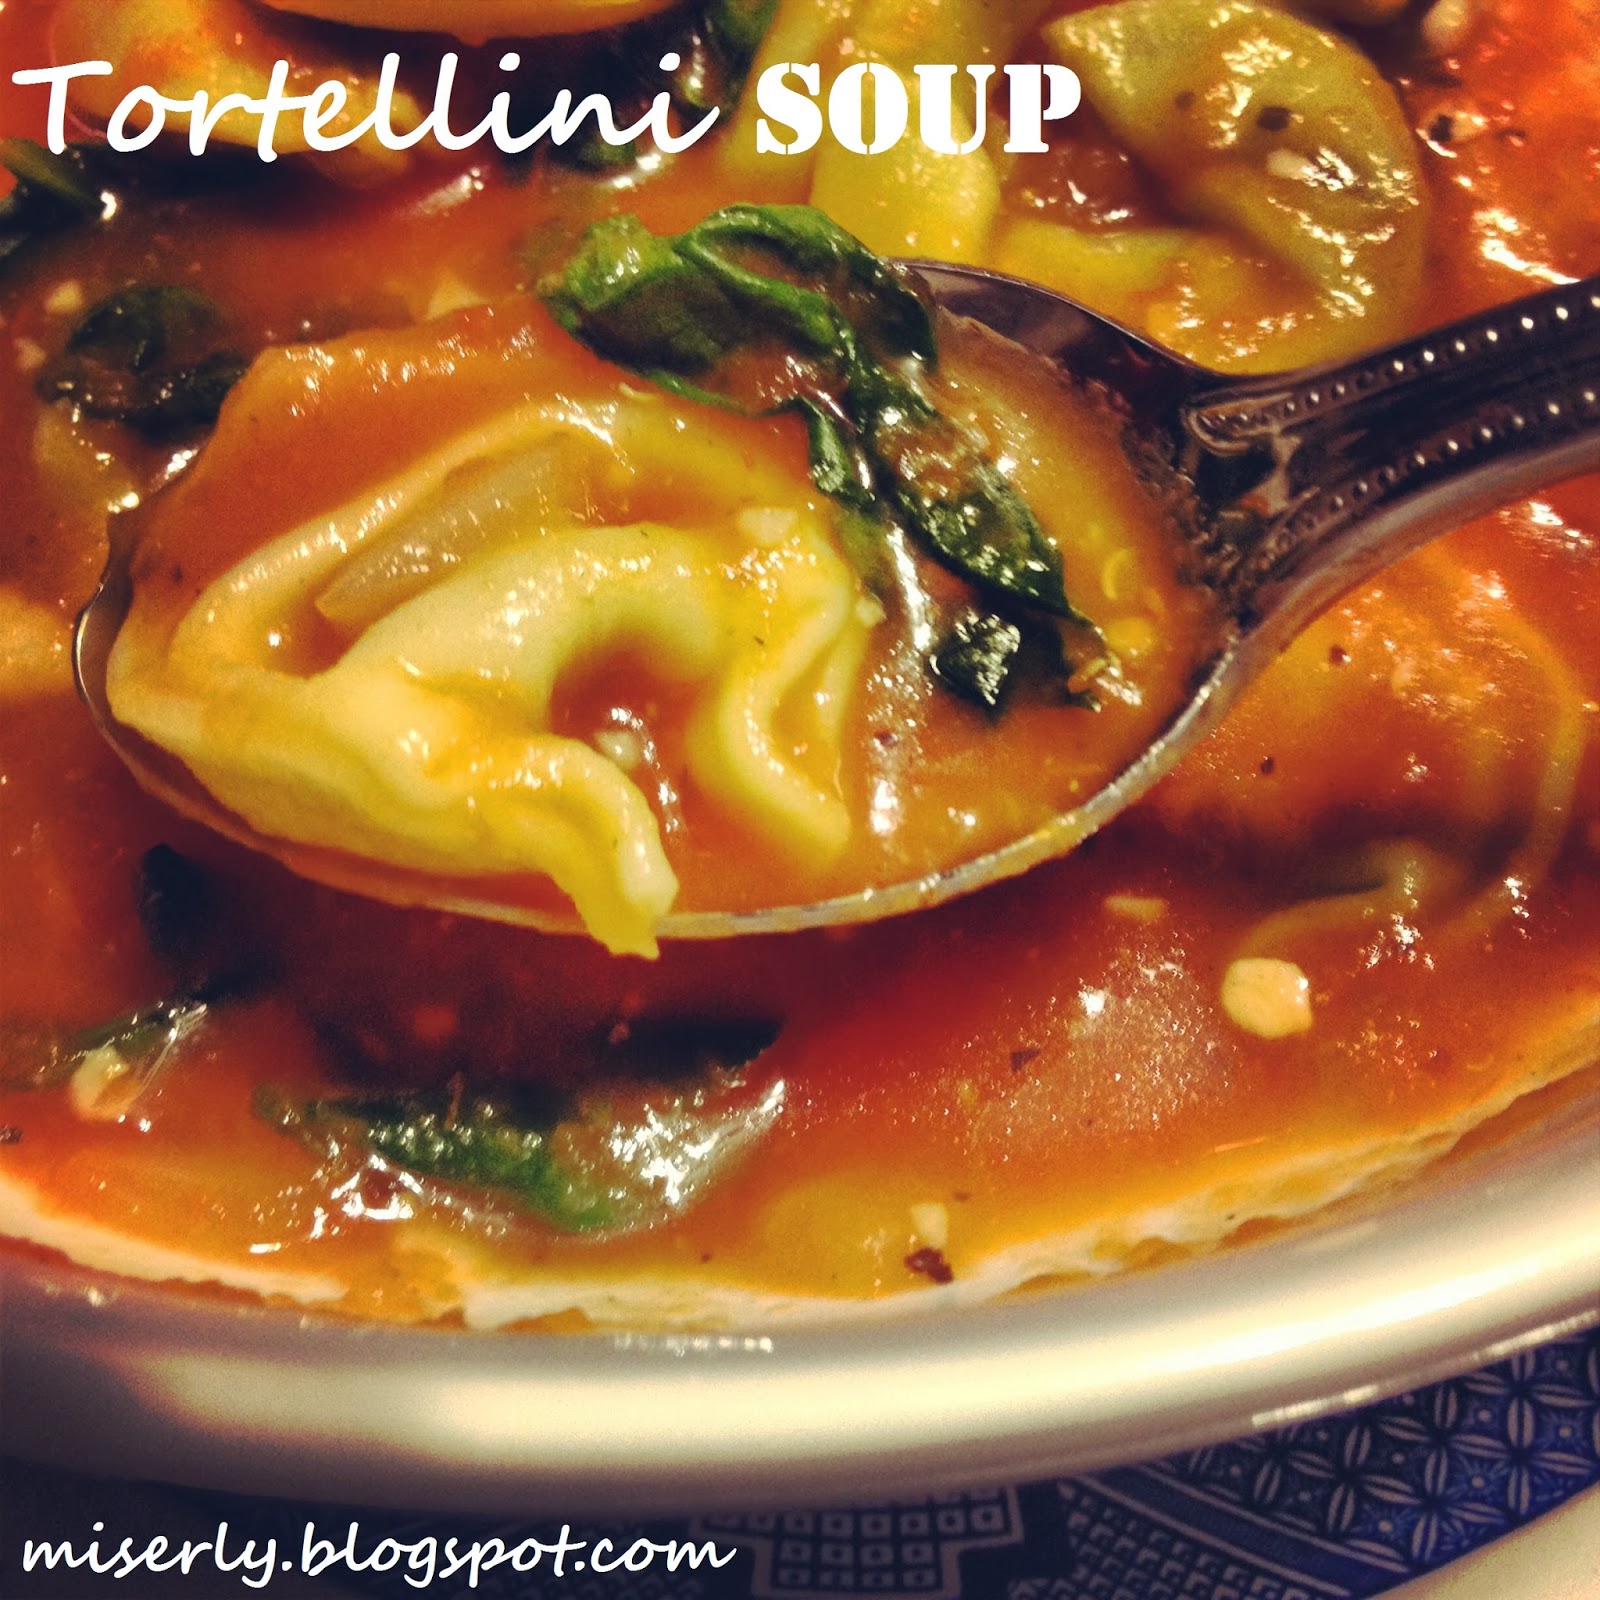 http://miserly.blogspot.com/2013/12/recipe-tortellini-soup.html